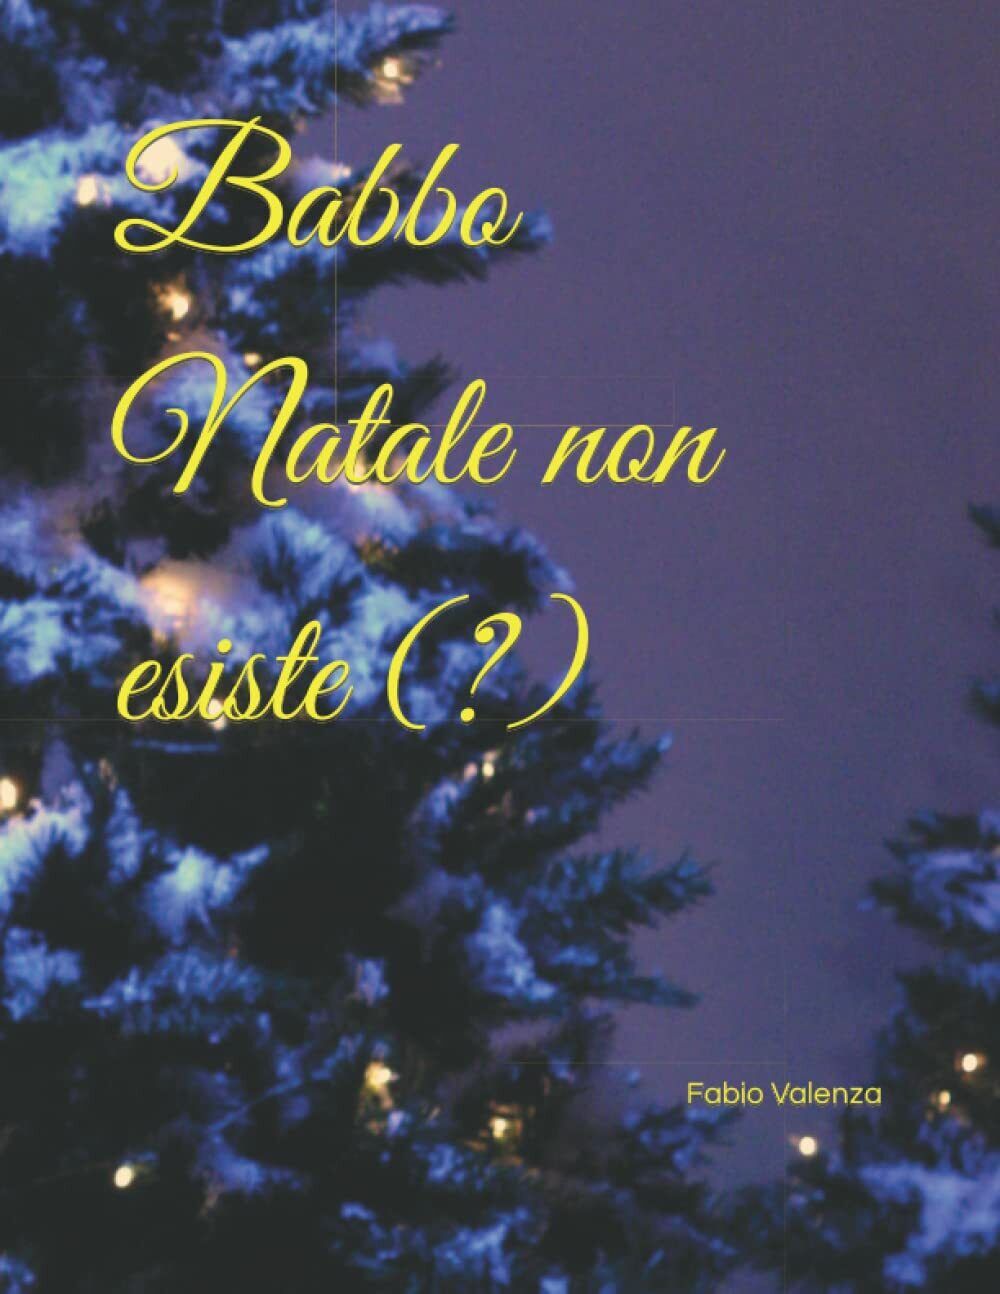 Babbo Natale non esiste (?) di Fabio Valenza,  2021,  Indipendently Published